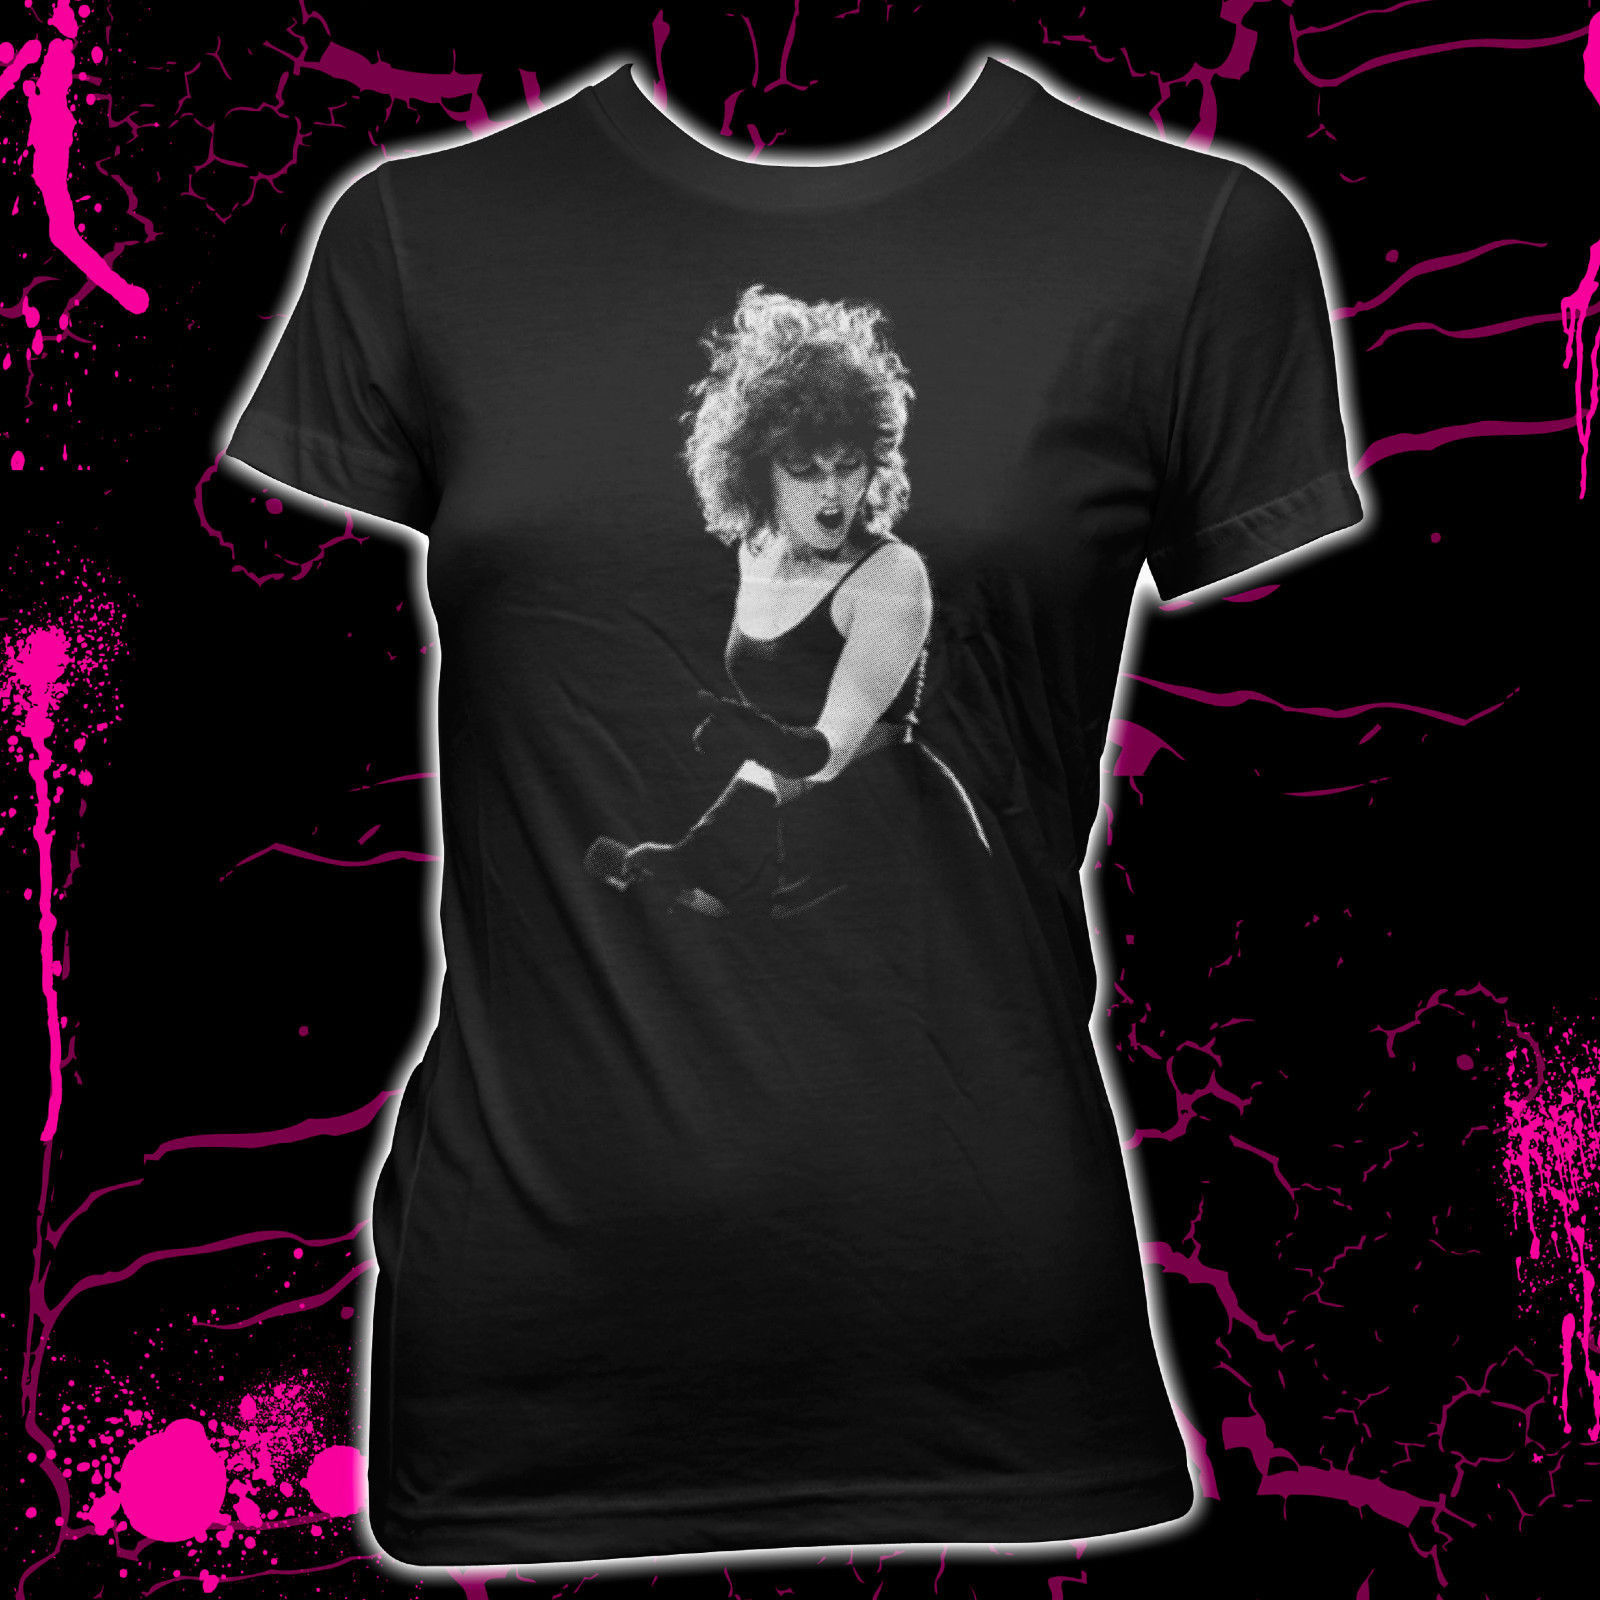 Pat Benatar - Women's Pre-shrunk, hand screened 100% cotton babydoll t-shirt